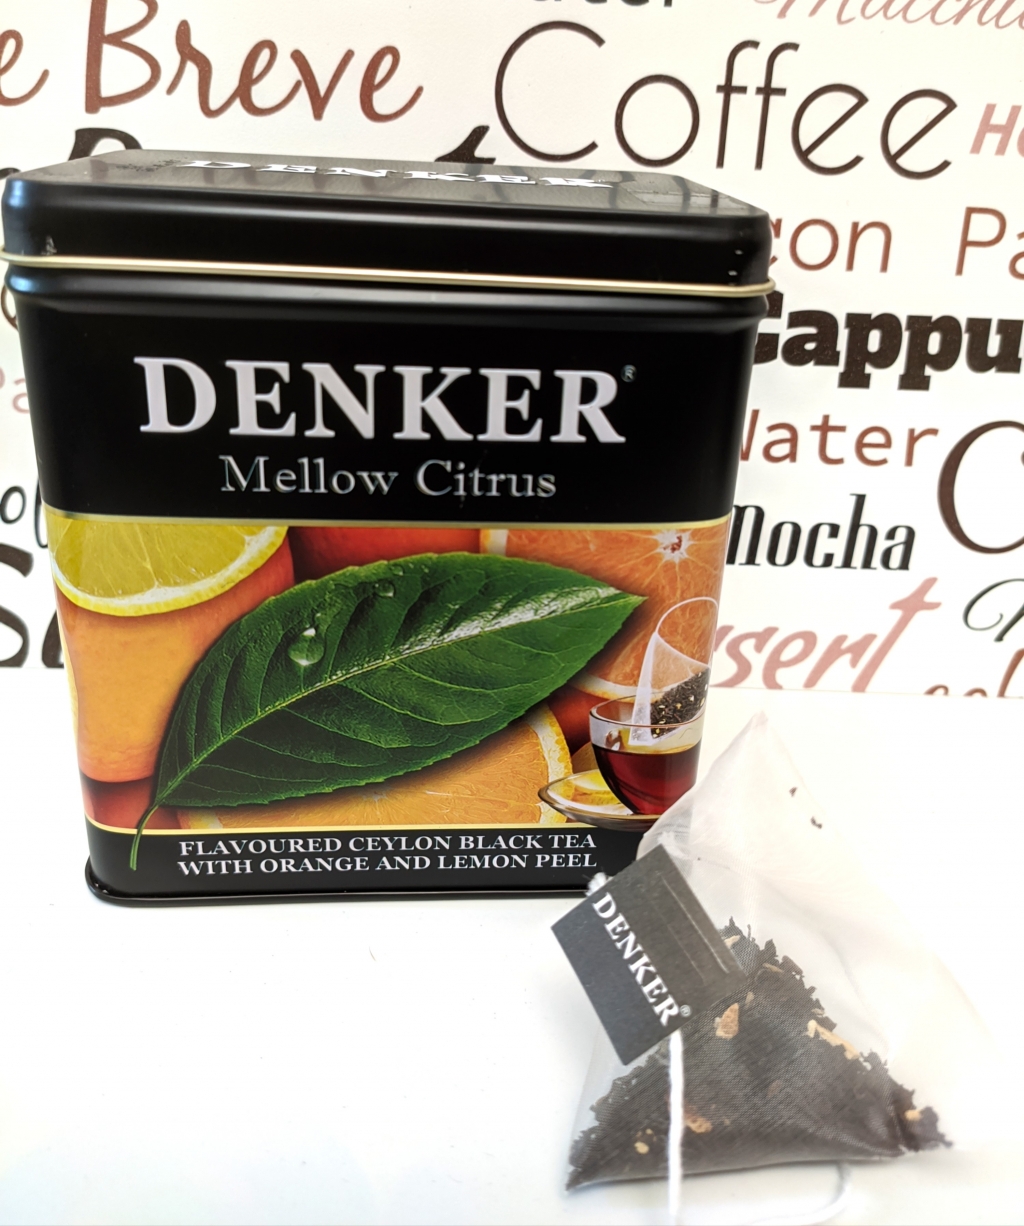 Denker Mellow Citrus черный чай - Очень ароматный чай